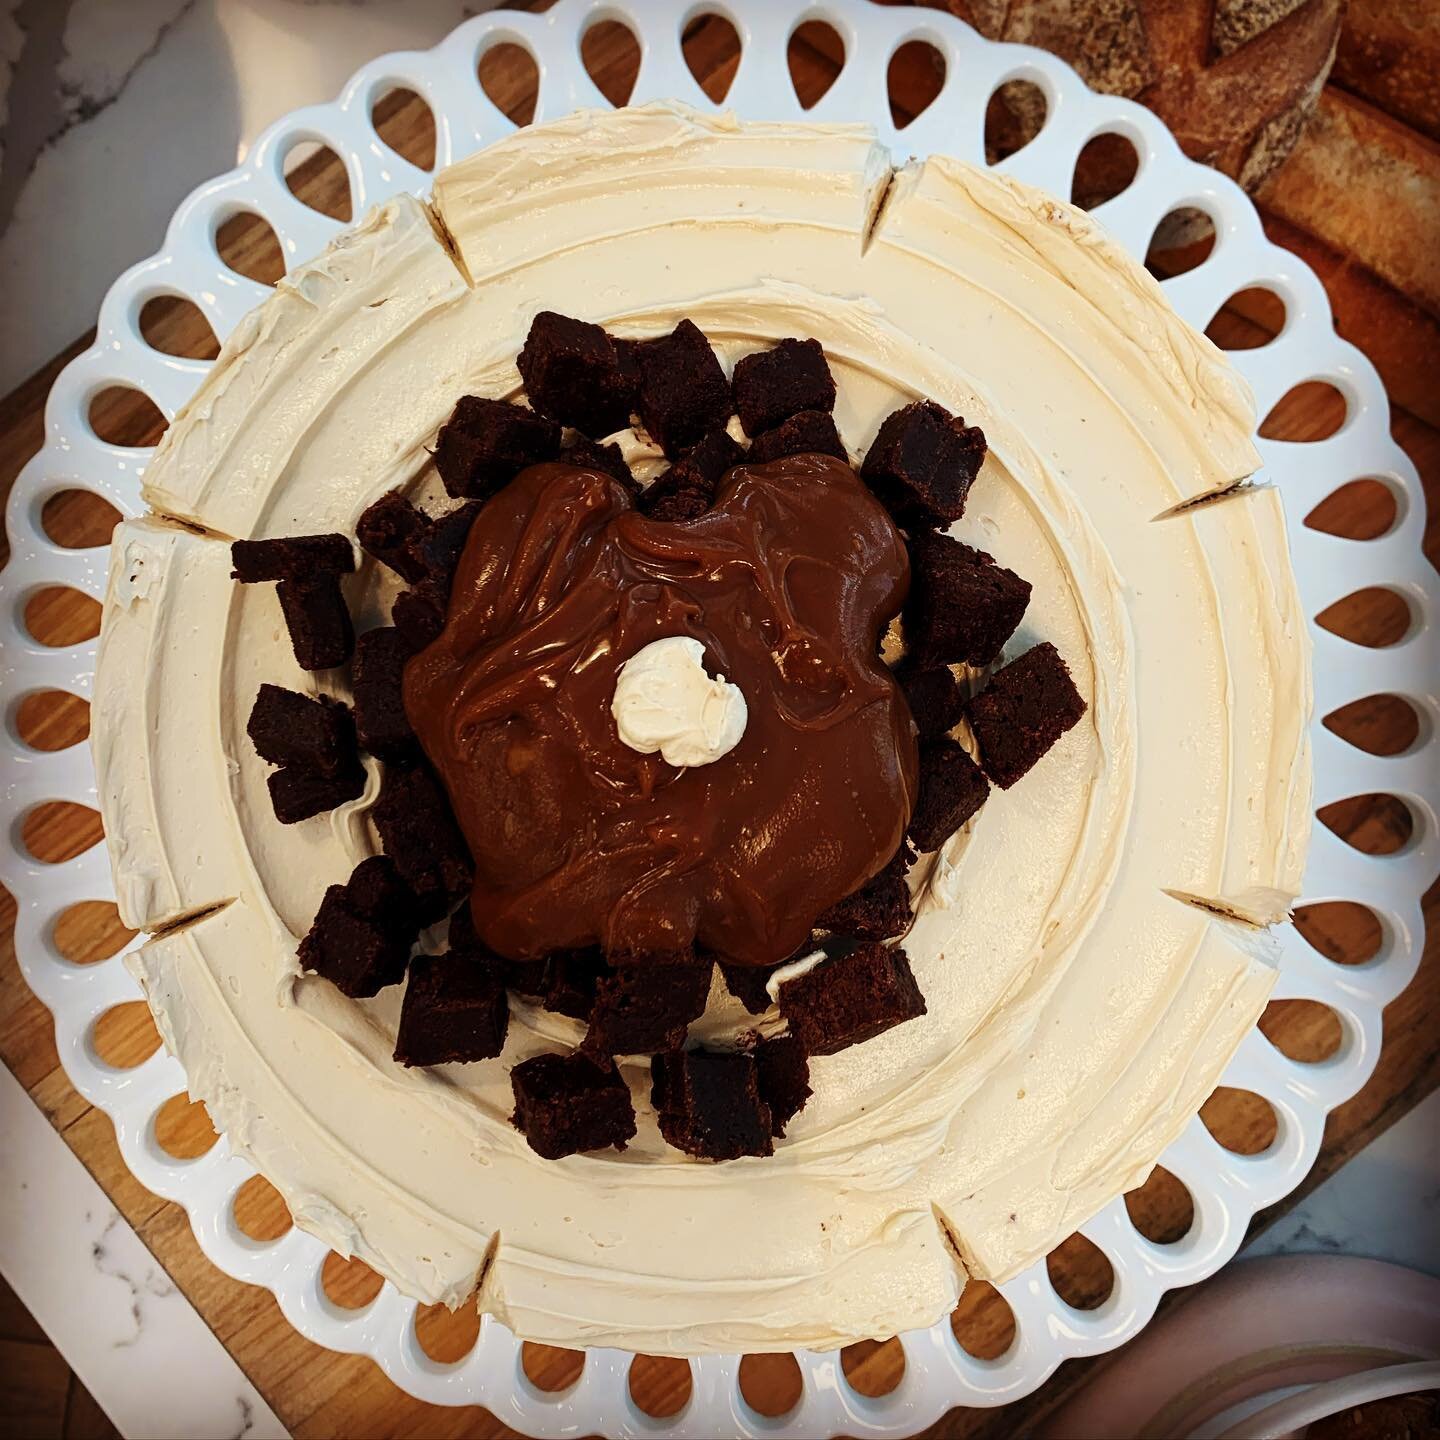 Brownies can be in cake layers too. 

#sainthenricakes #cakeshop #mtlcakes #montrealcakes #montrealdesserts #montrealsweets #montrealbakery #montrealfoodie #montrealfood #montreal #mtlcafe #mtlcoffeecrawl #mtlcoffee #browniecake #caramelcake #moka #m